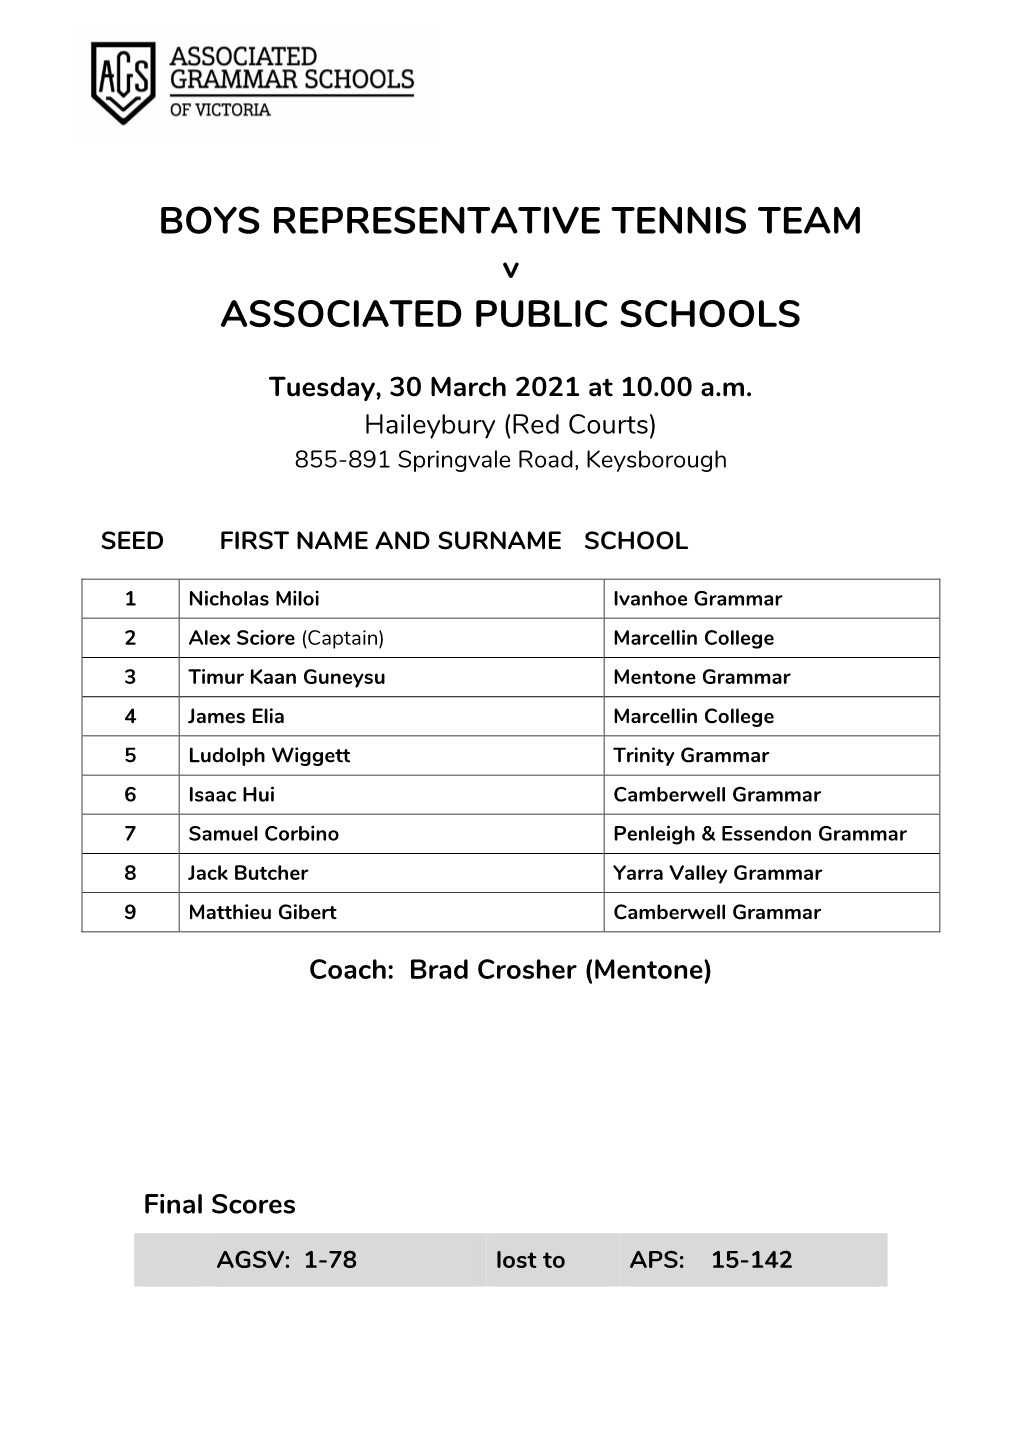 Boys Representative Tennis Team Associated Public Schools